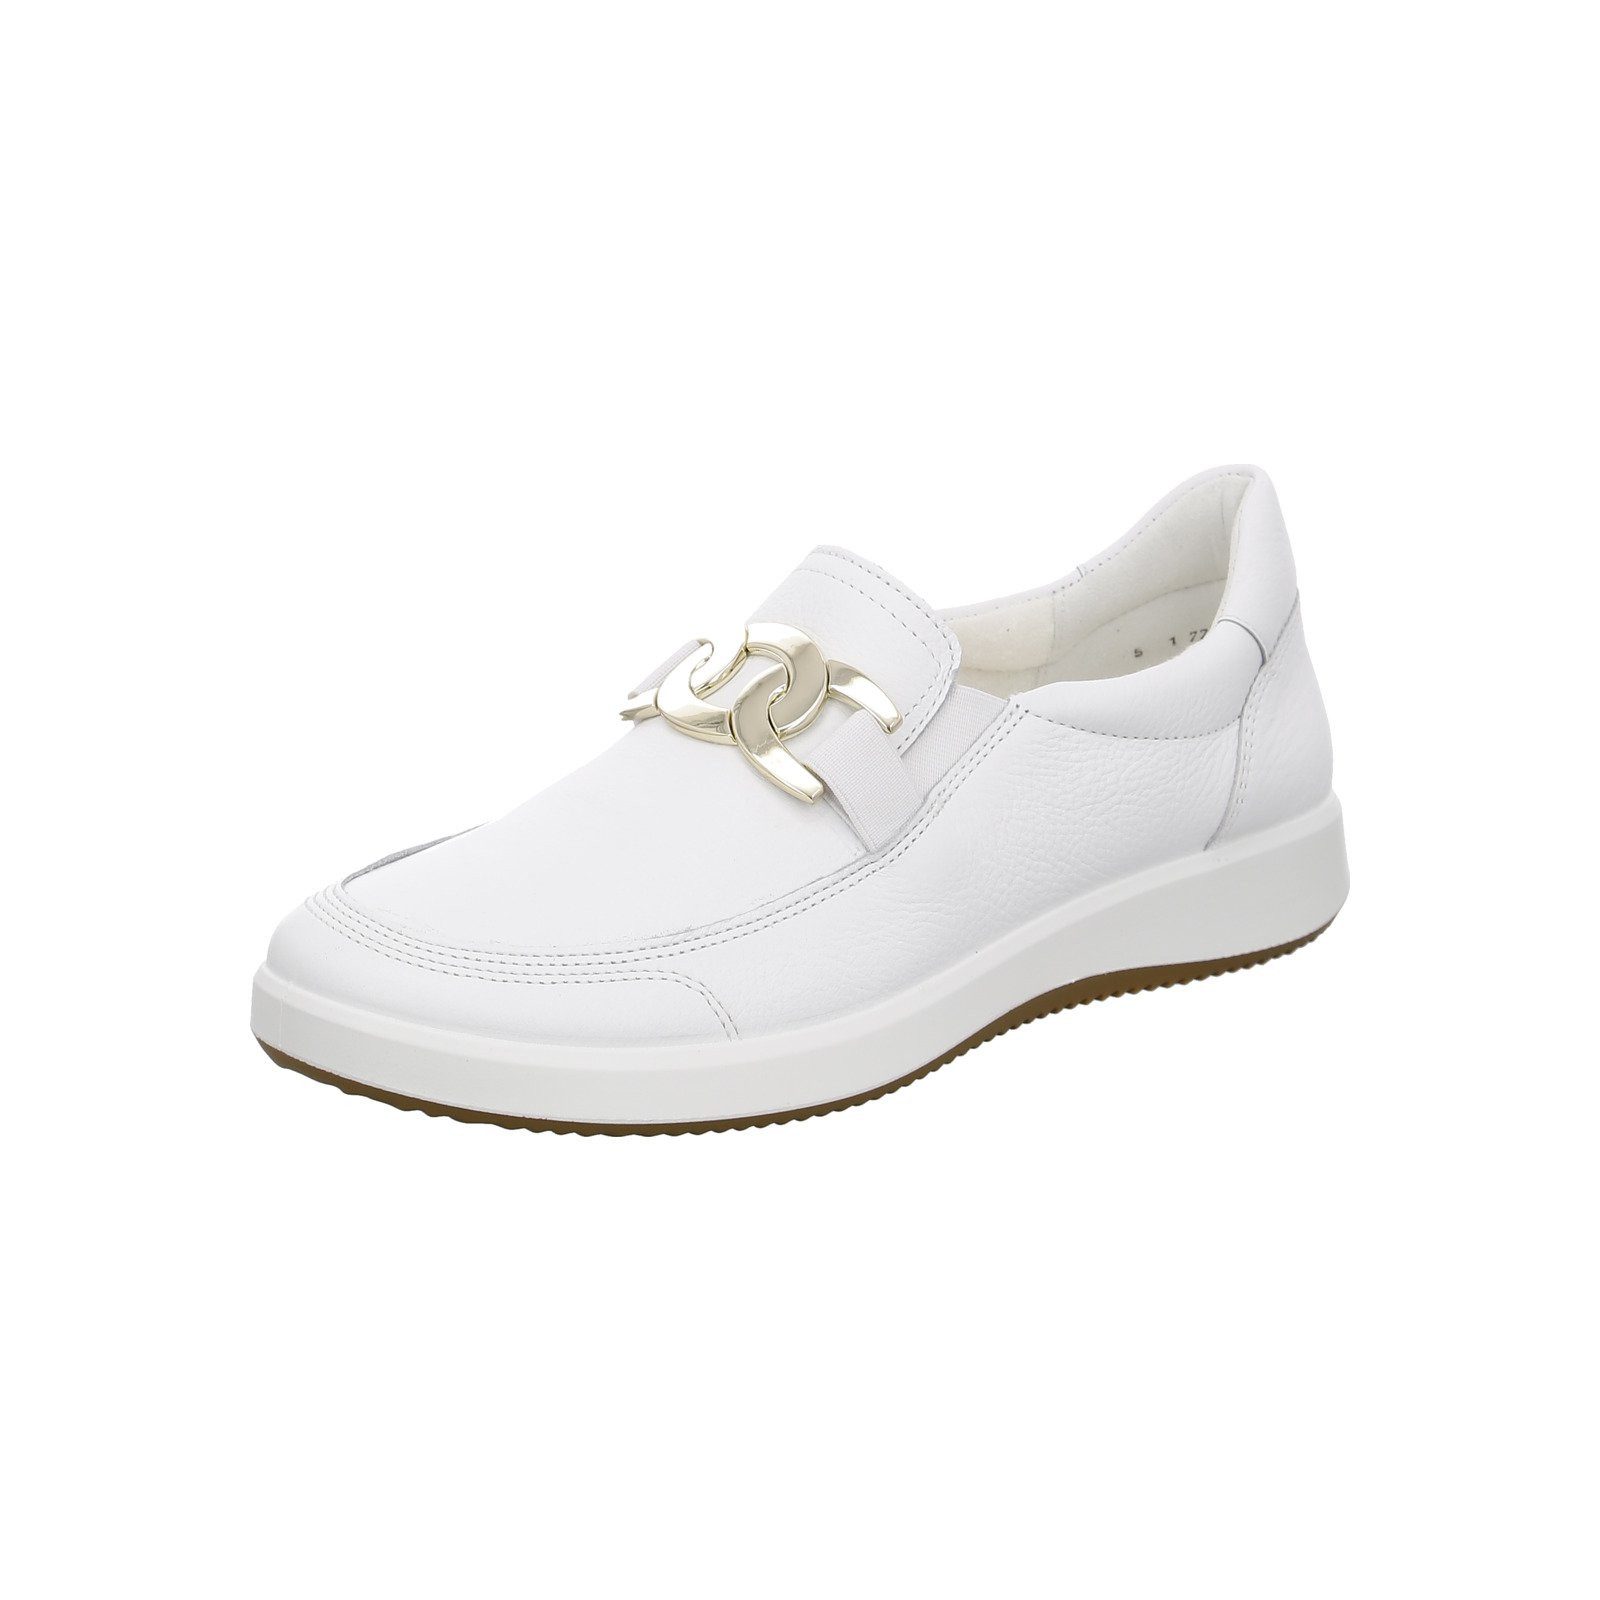 Ara Roma - Damen Schuhe Slipper Sneaker Glattleder weiß